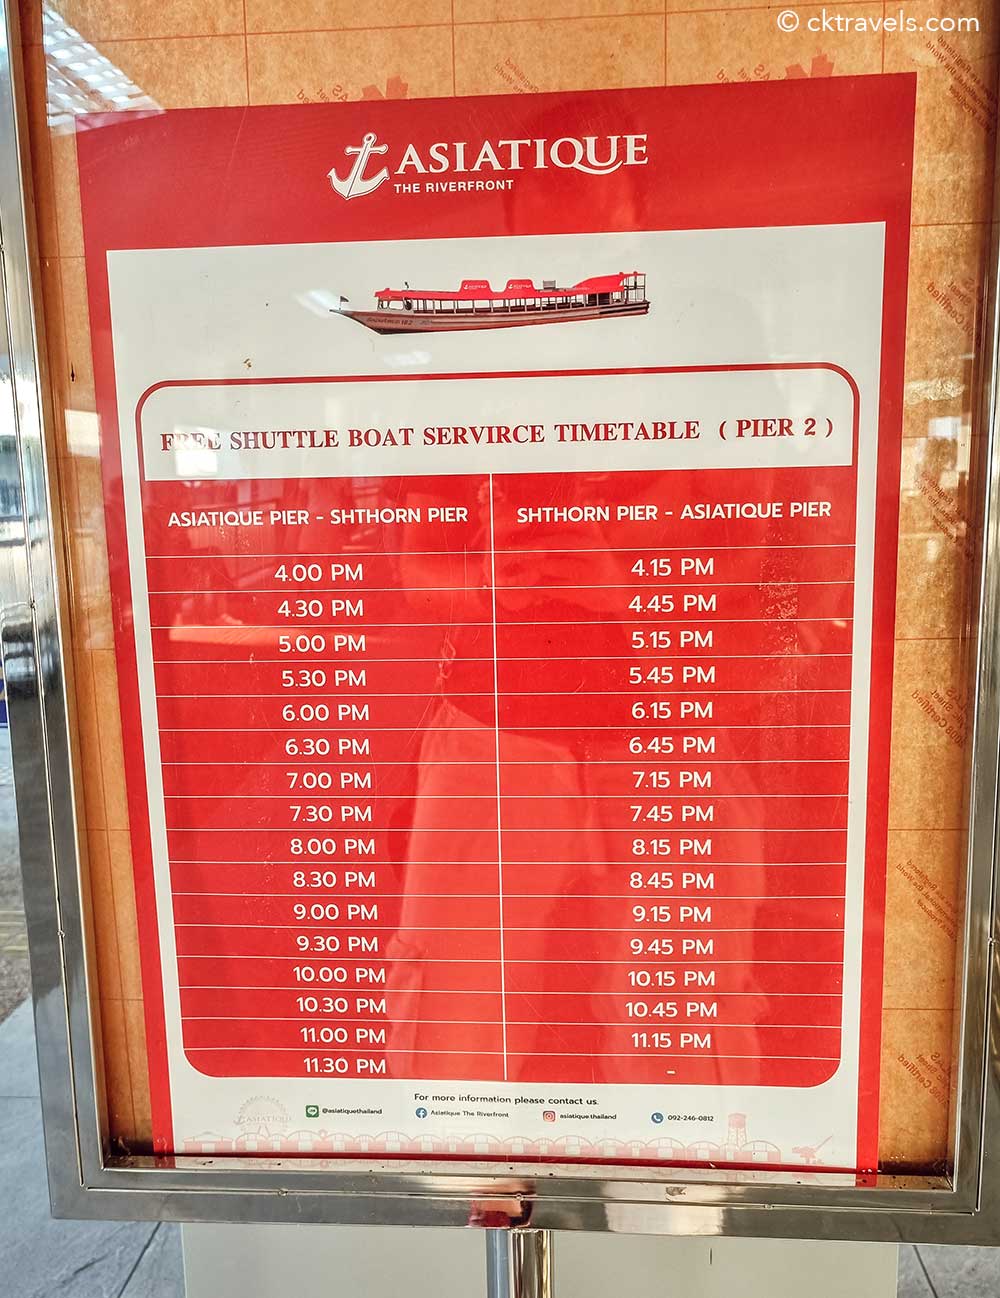 Asiatique night market free shuttle boat service timetable